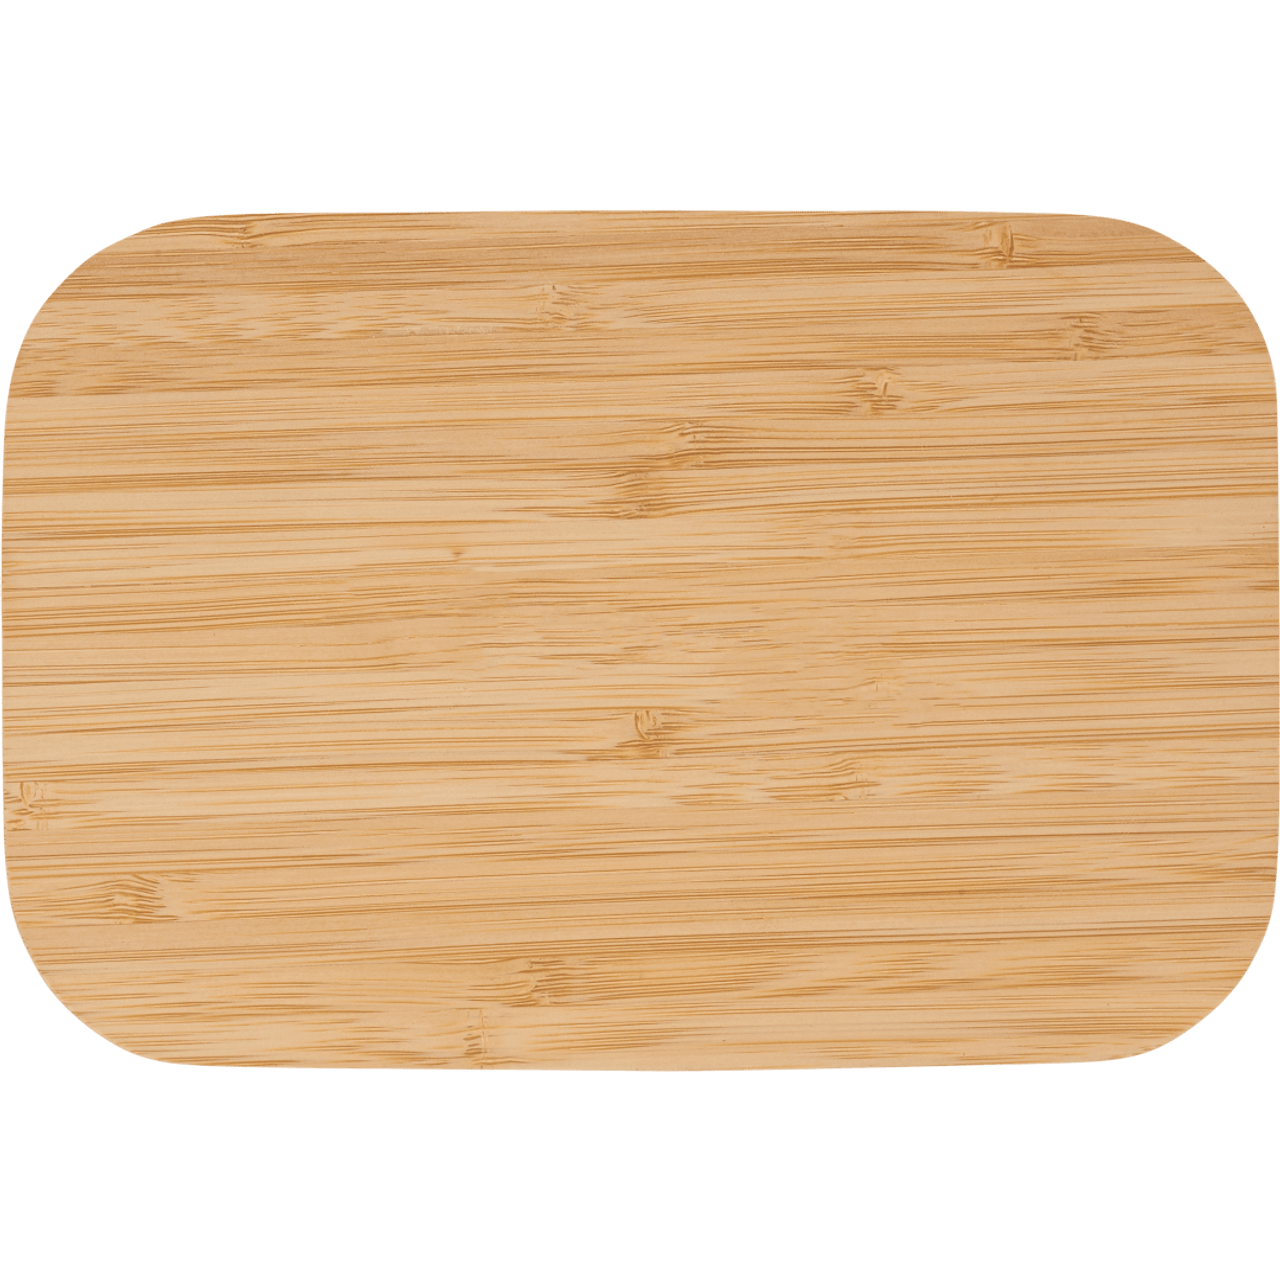 Custom Bamboo Fiber Lunch Box with Cutting Board Lid